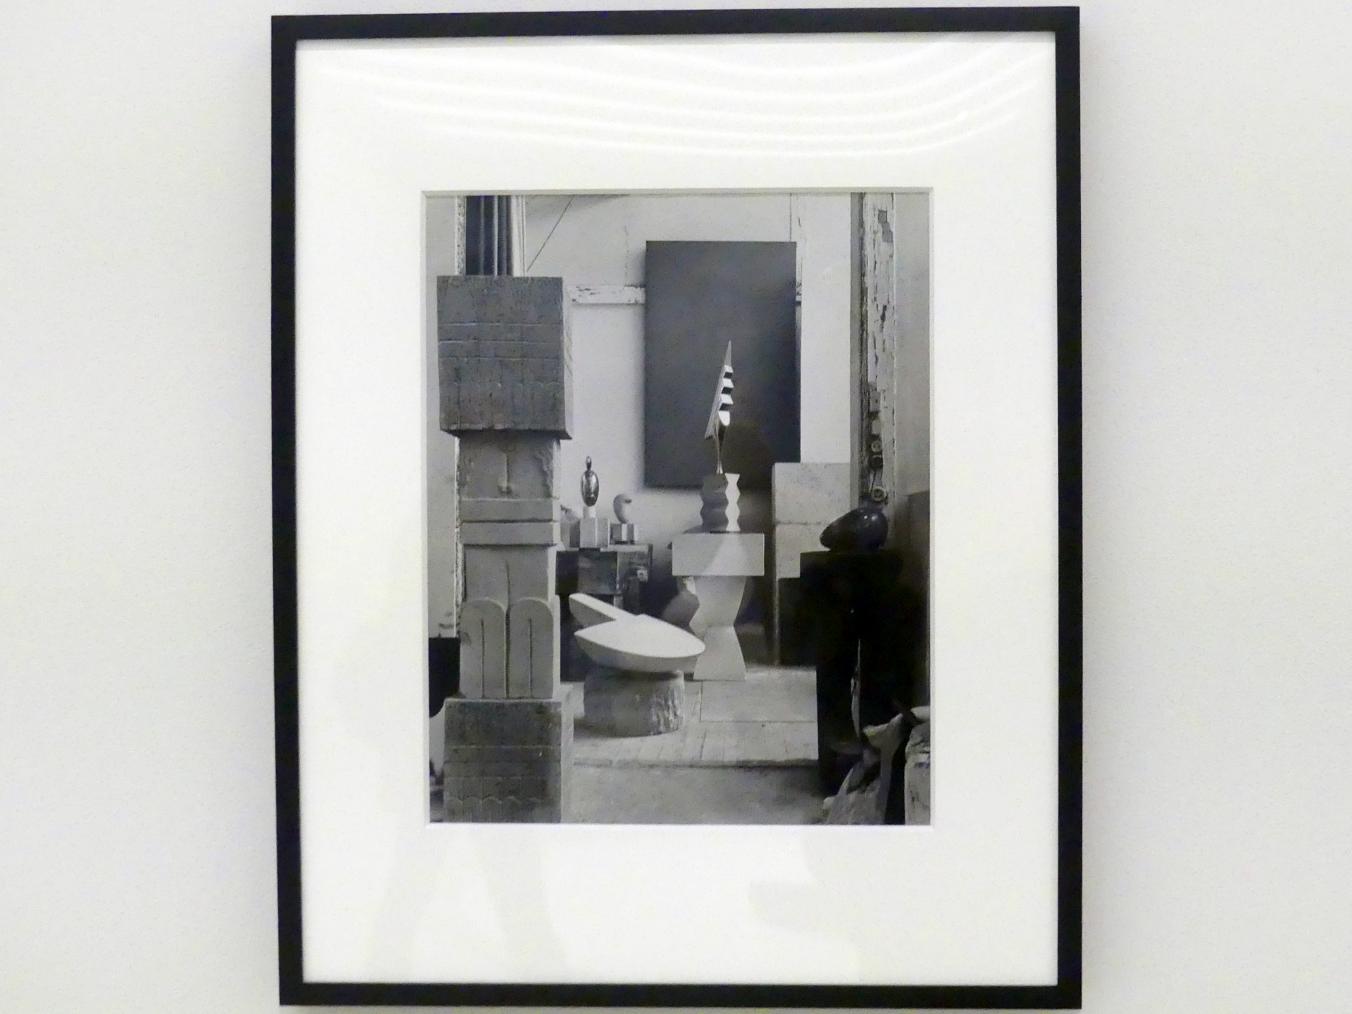 Wayne F. Miller (1946), Constantin Brancusi's studio: Boundary Marker, Flying Turtle, Blond Negress, Eileen Lane, Cock, and Sleeping Muse, New York, Solomon R. Guggenheim Museum, Brancusi, 1946